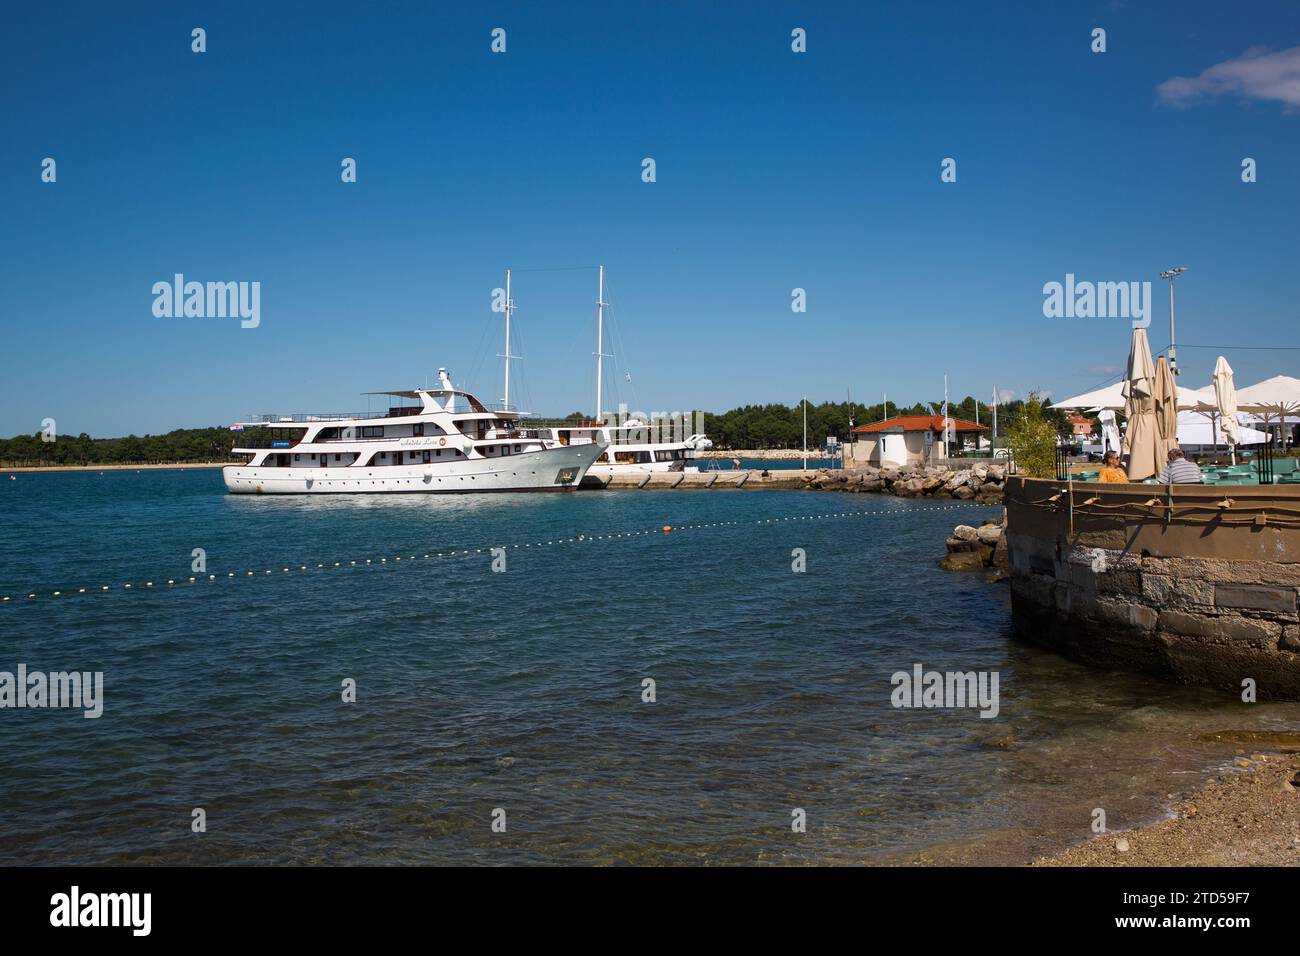 Boat, People, Seaside Restaurant, Old Town,Novigrad, Croatia Stock Photo